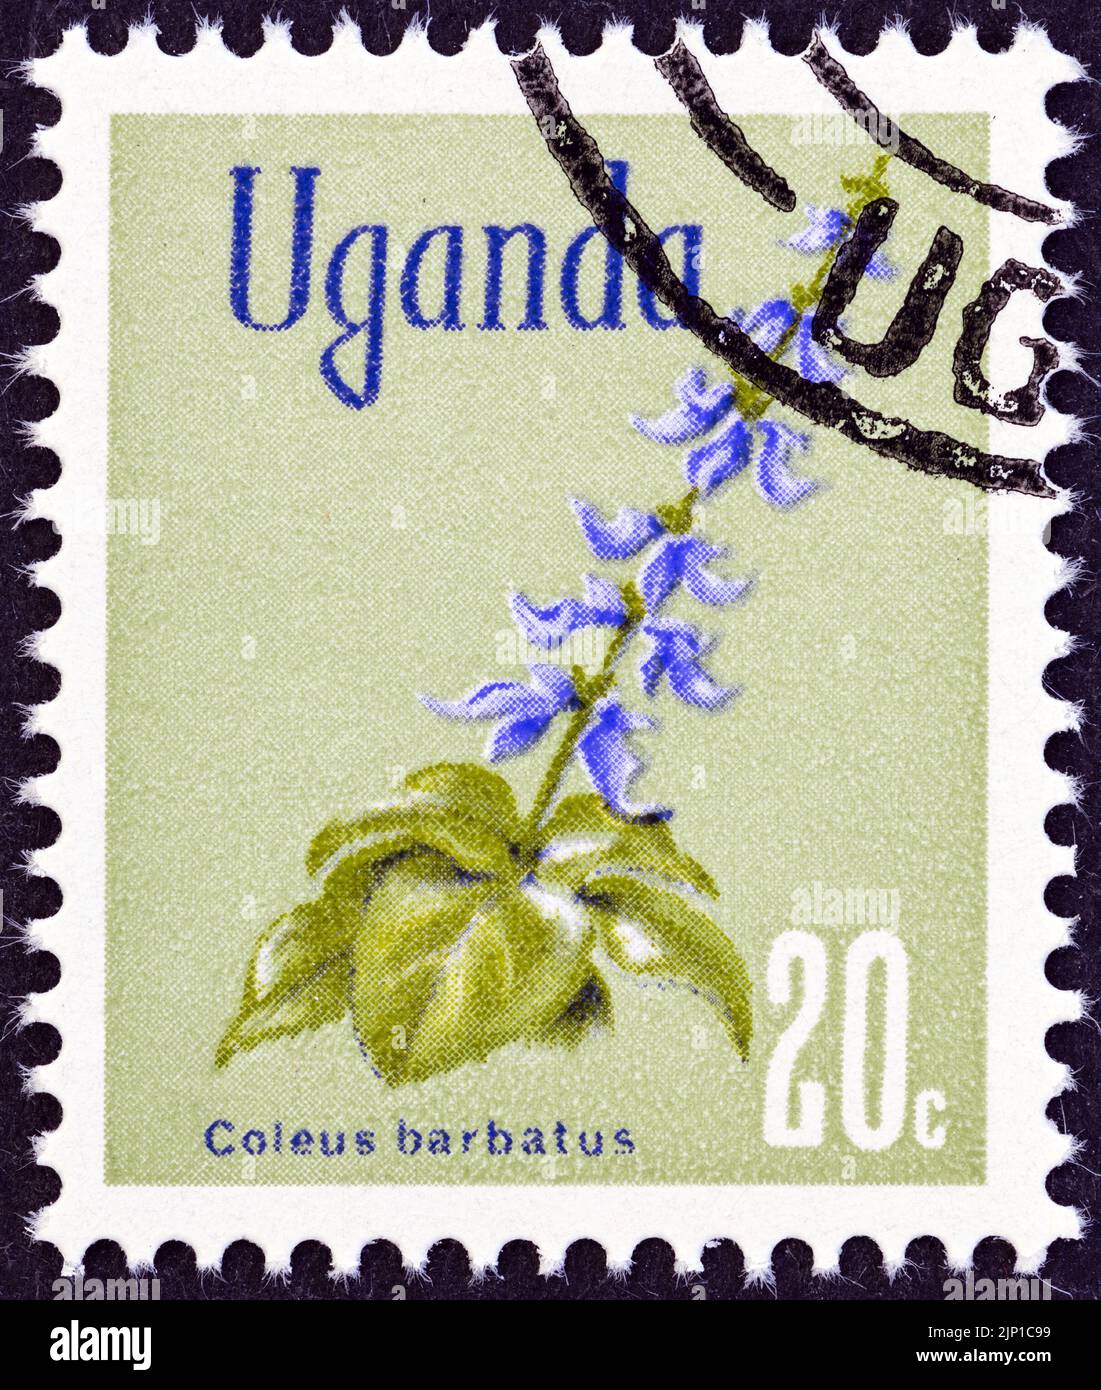 UGANDA - CIRCA 1969: A stamp printed in Uganda from the 'Flowers' issue shows Coleus barbatus, circa 1969. Stock Photo